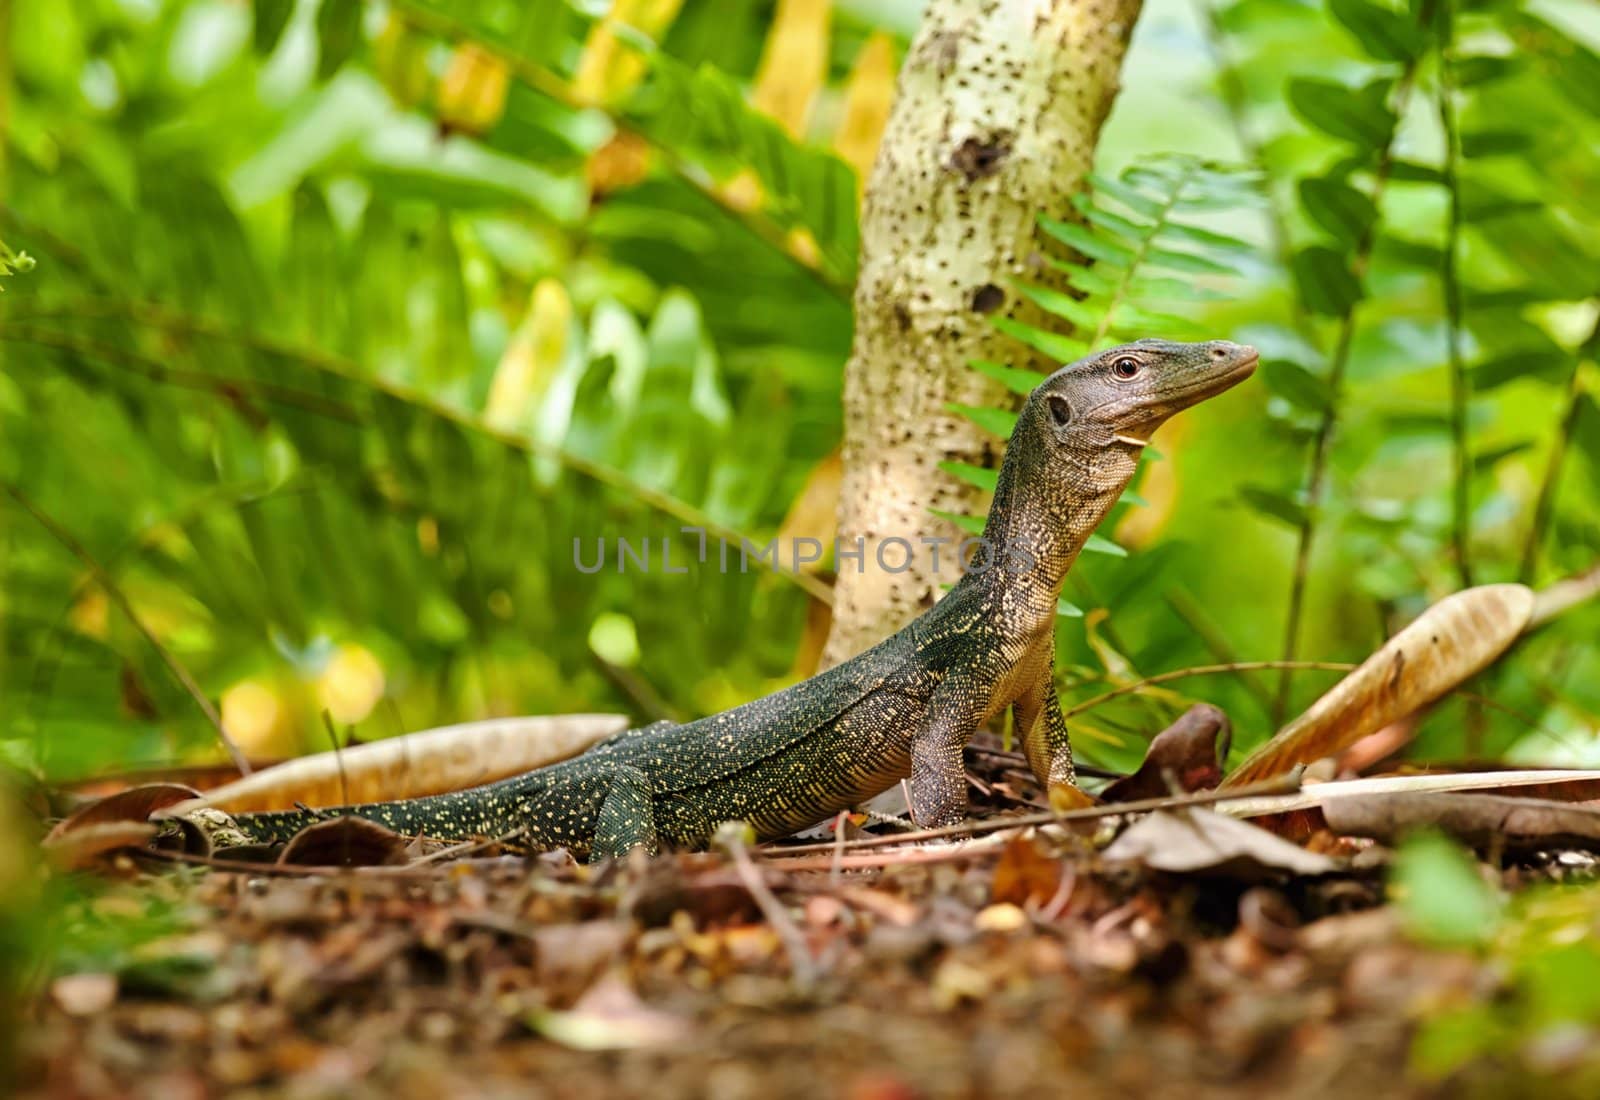 goanna lizard in undergrowth by clearviewstock